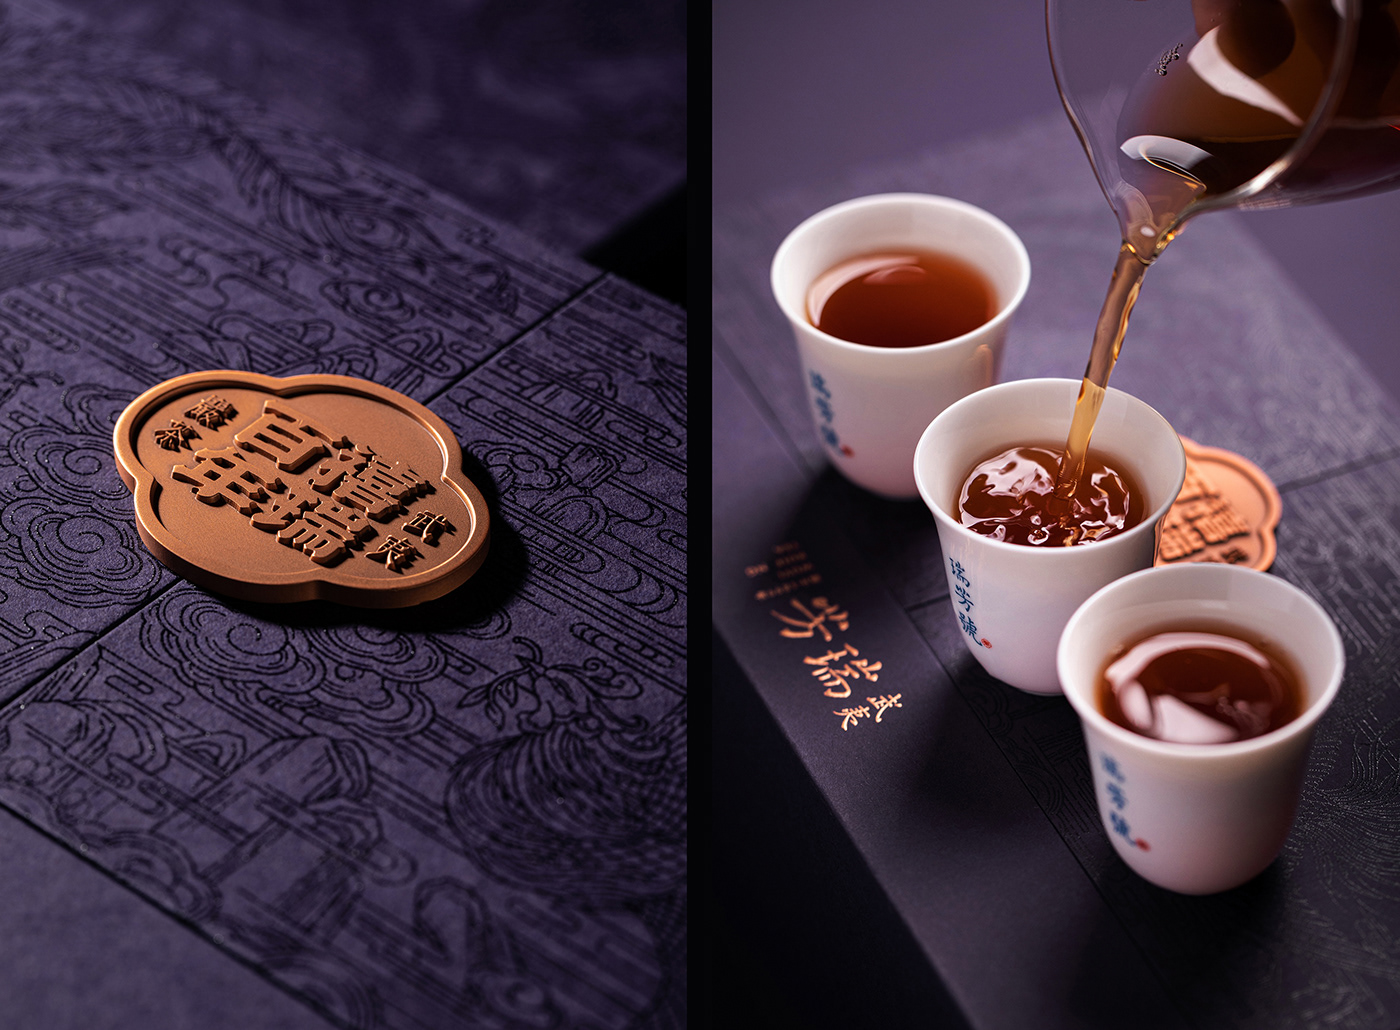 chinese tea culture Tea Package Design Tea Packaging 中国茶文化 岩茶包装 武夷岩茶 武夷岩茶包装 茶包装 茶包装设计 茶罐包装